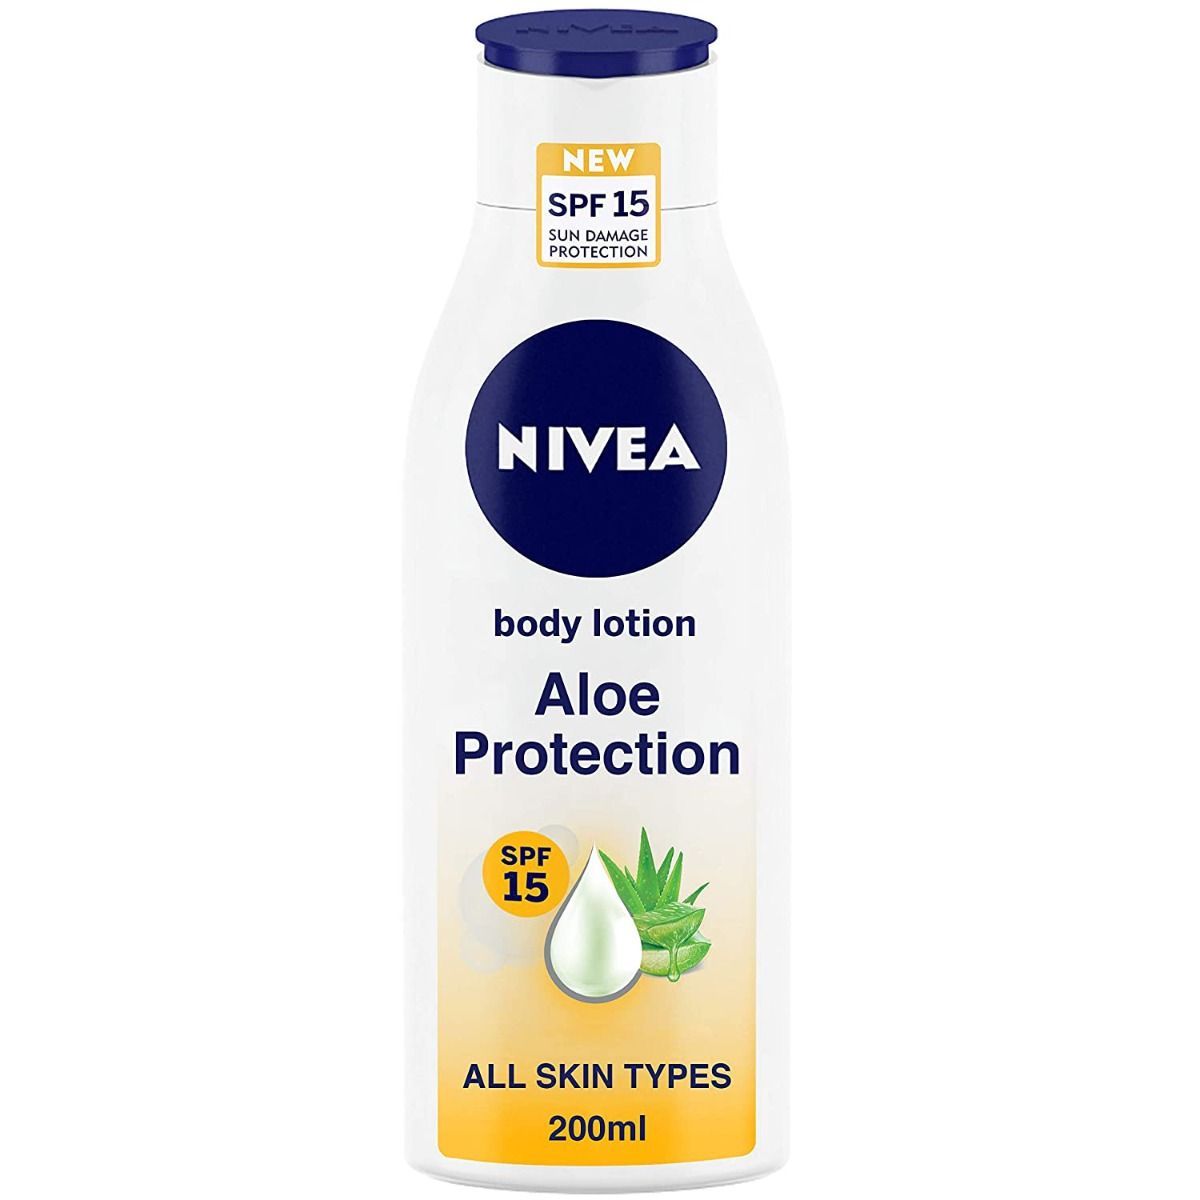 Buy Nivea Aloe Protection SPF 15 Body Lotion, 200 ml Online